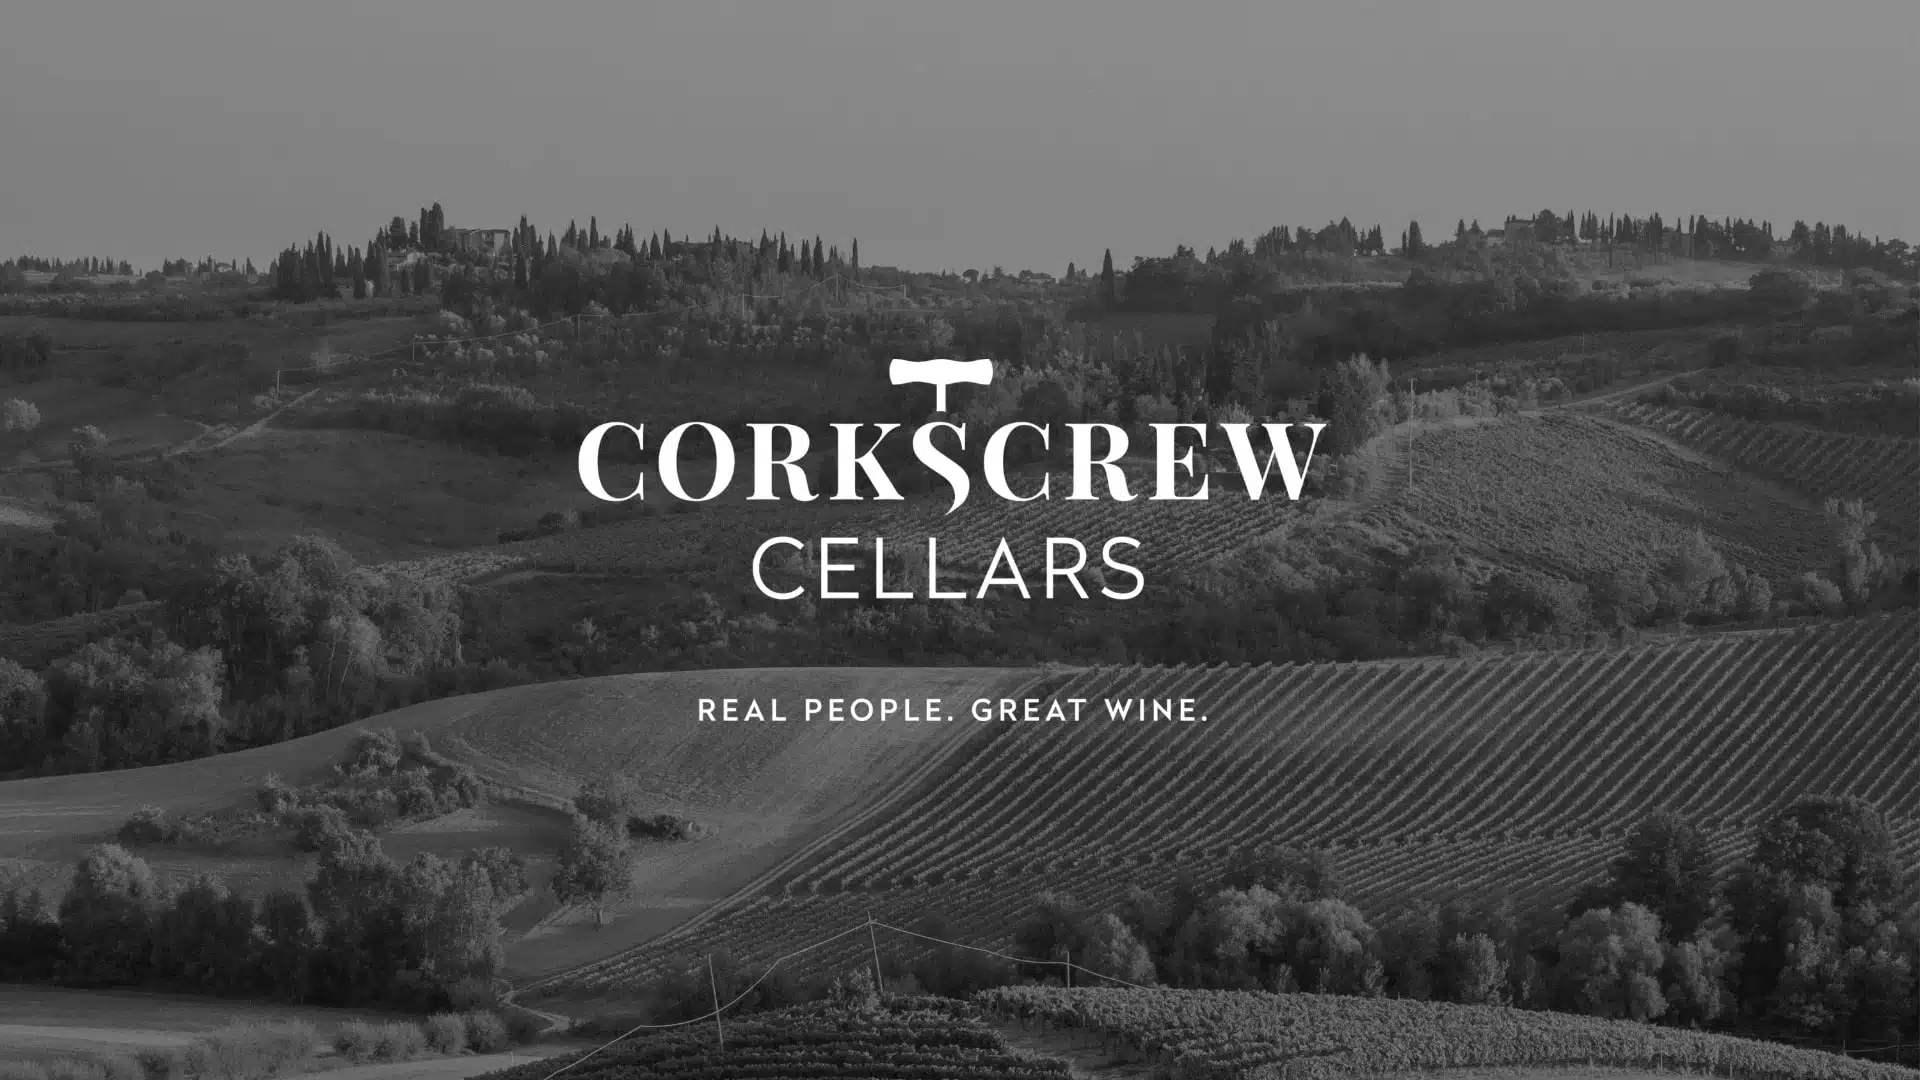 Corkscrew cellars